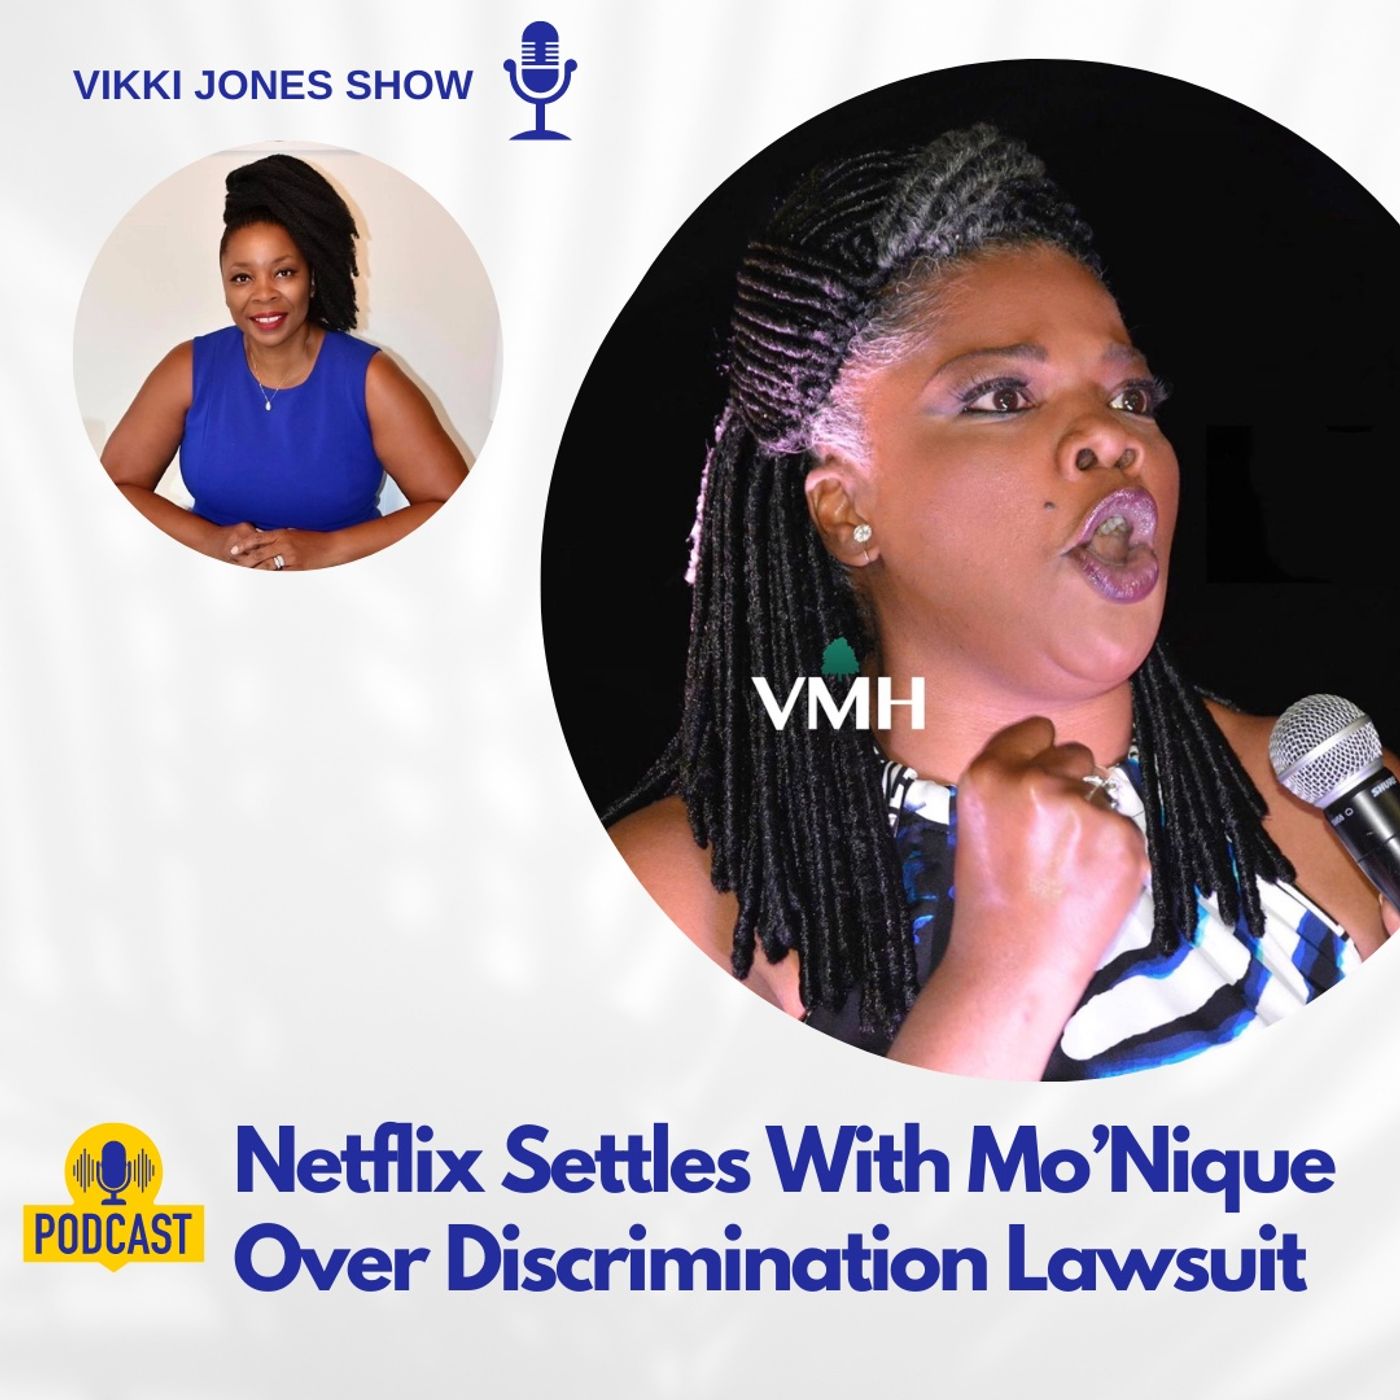 Netflix Settles With Comedian Mo’Nique Over Discrimination Lawsuit